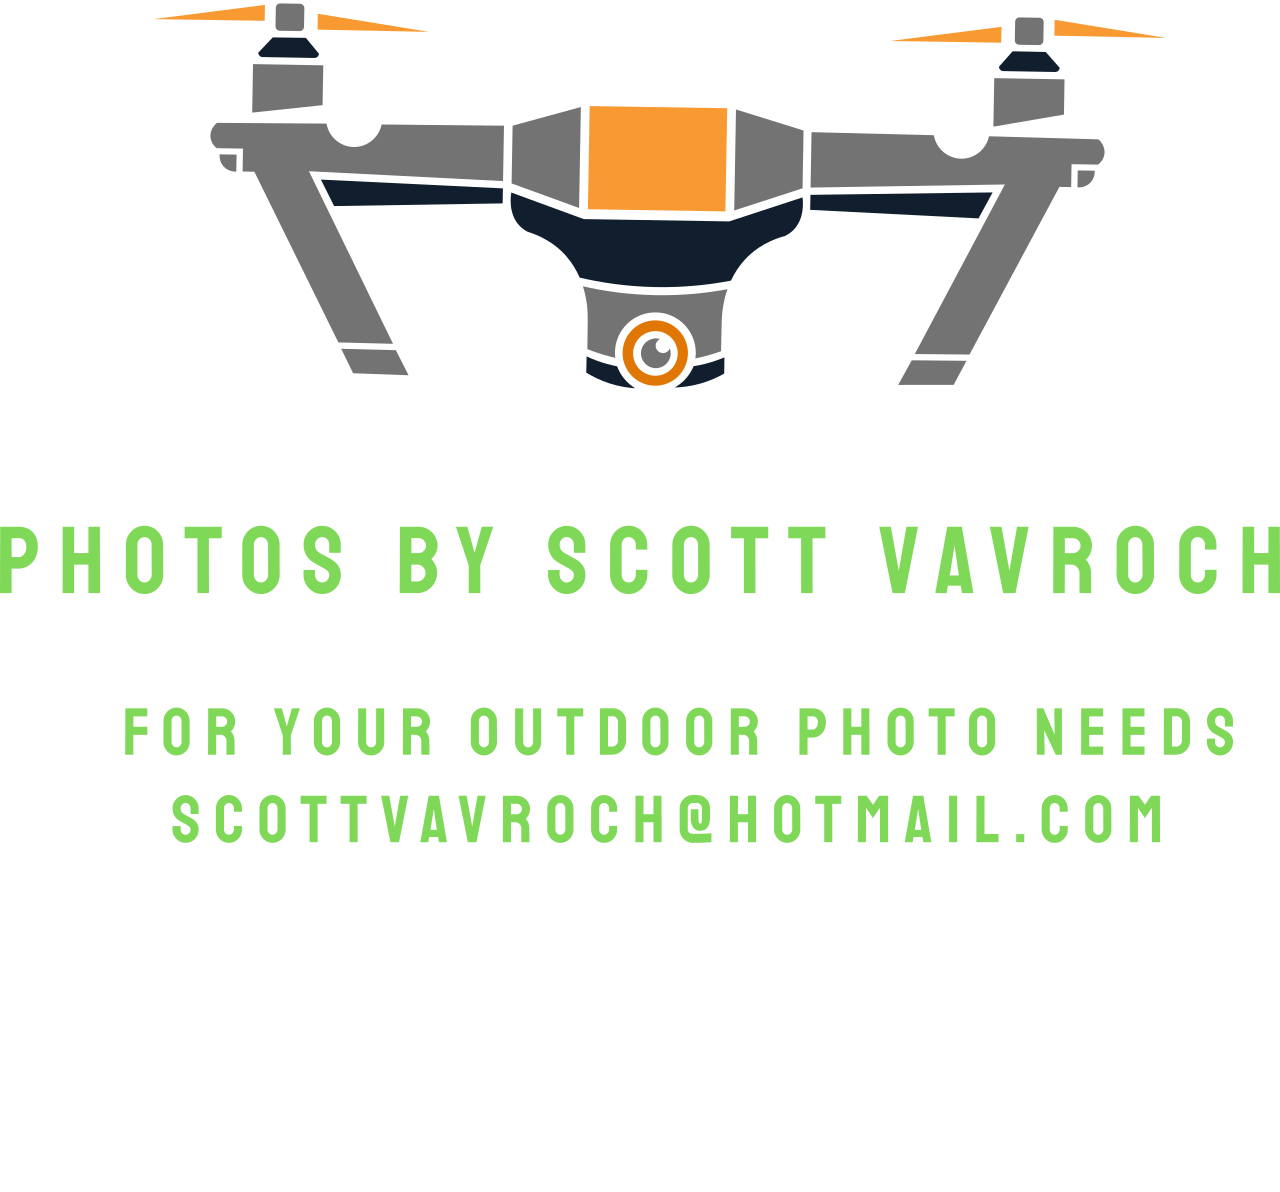 Photos by Scott Vavroch 's logo